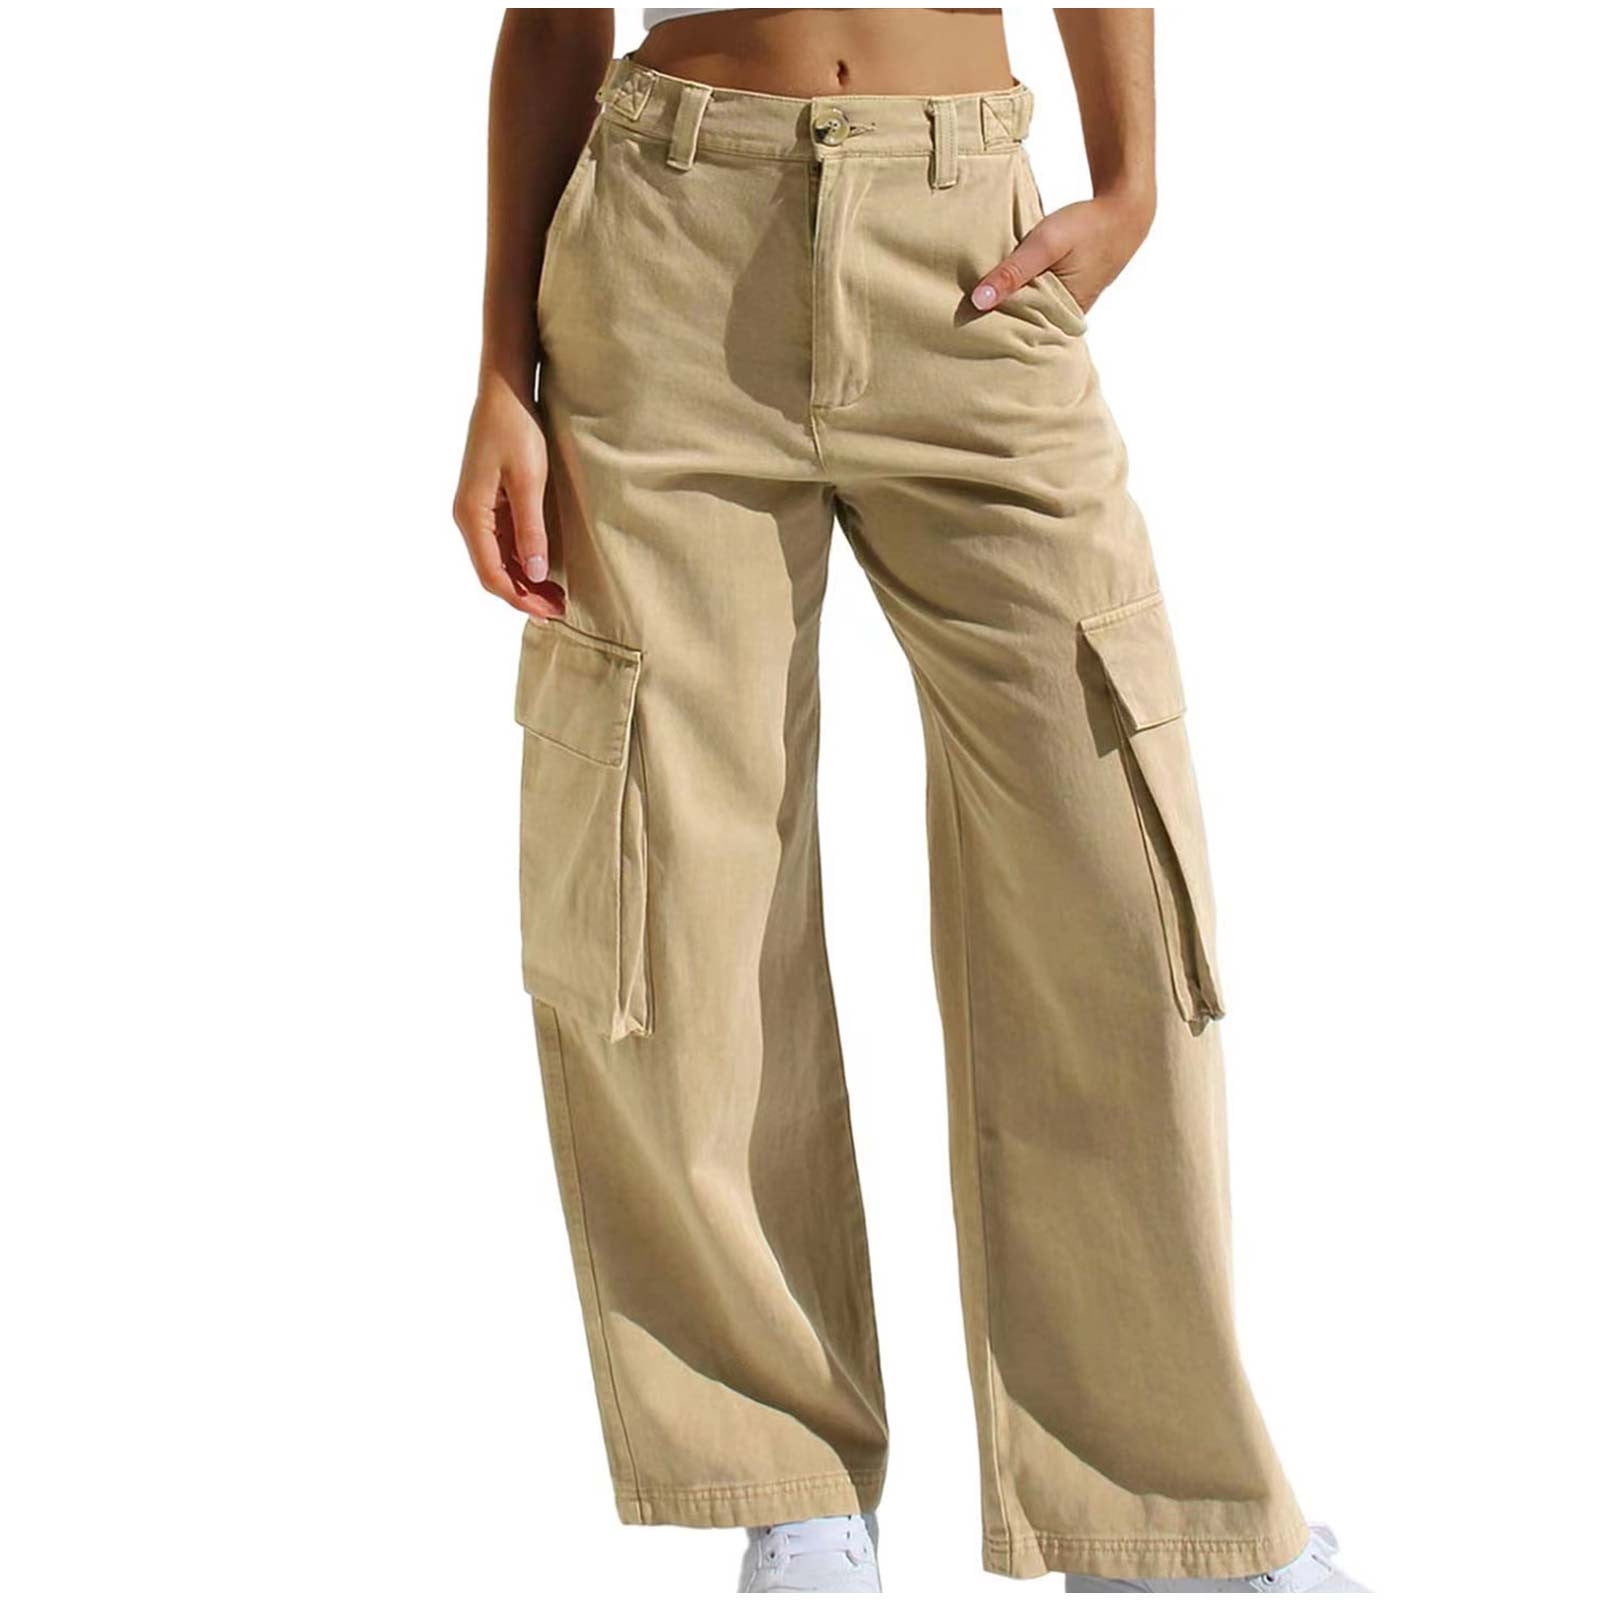 XFLWAM Women's High Waisted Cargo Baggy Jeans Flap Pocket Side Denim Pants  Straight Leg Streetwear Trousers with Big Pockets Gray L 